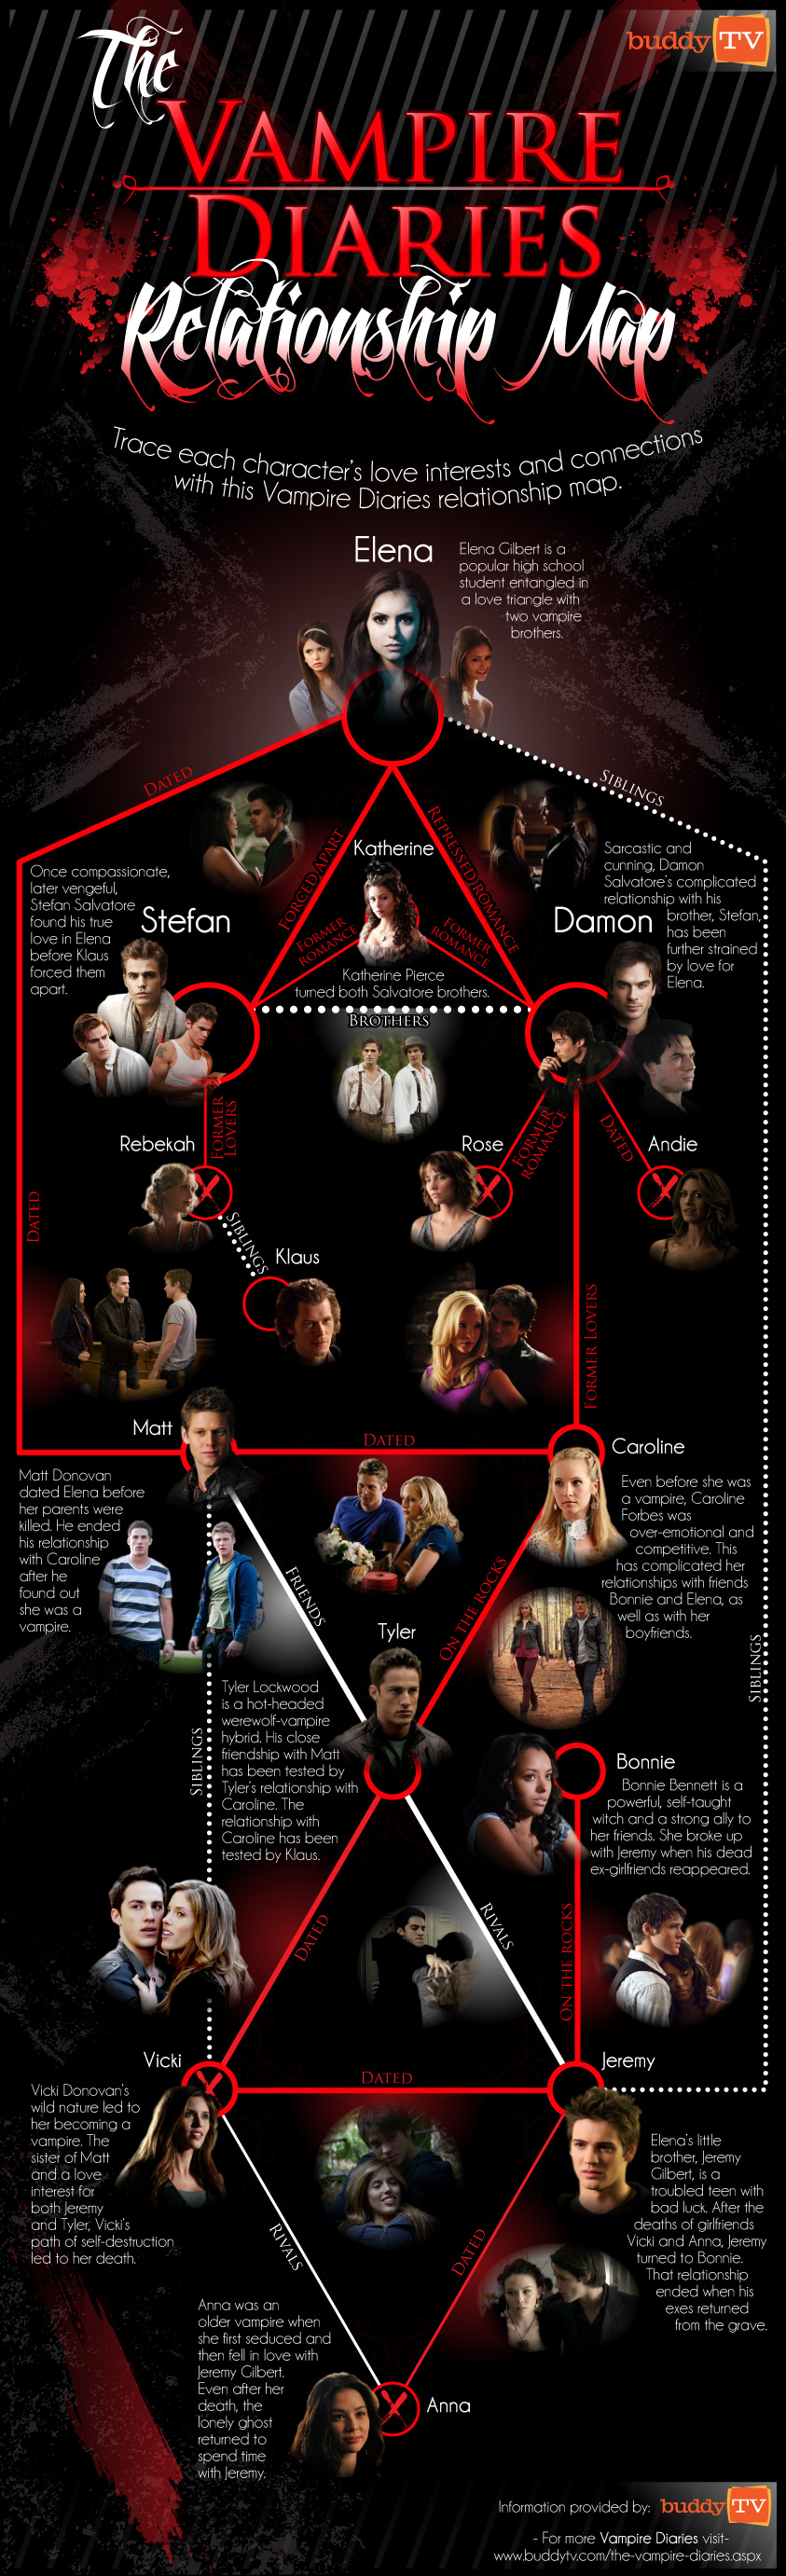 The Vampire Diaries Relationship Map